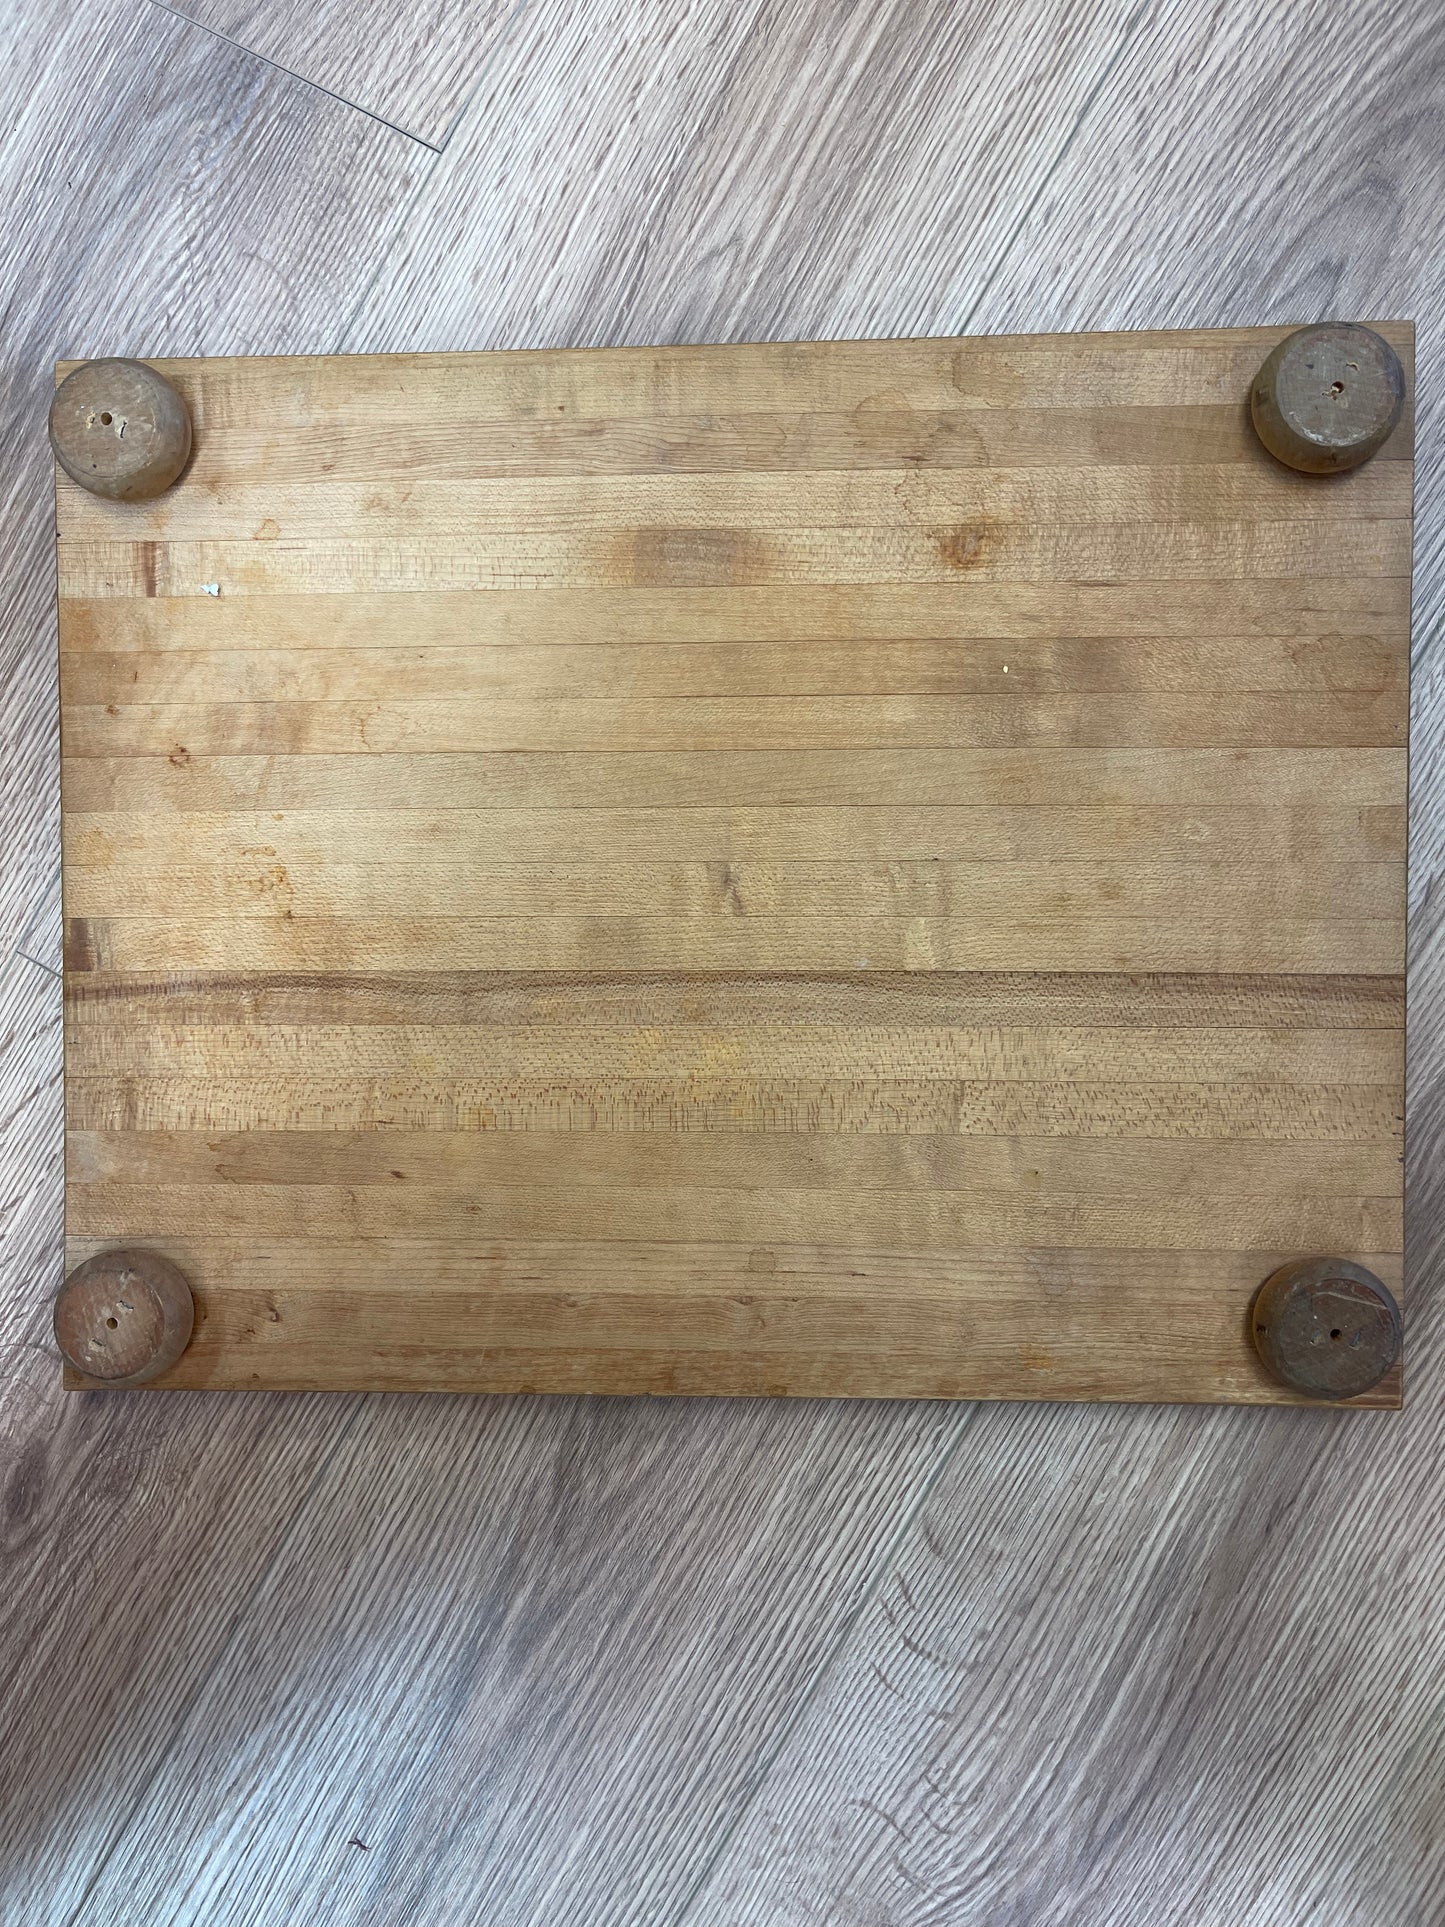 Sloped cutting board